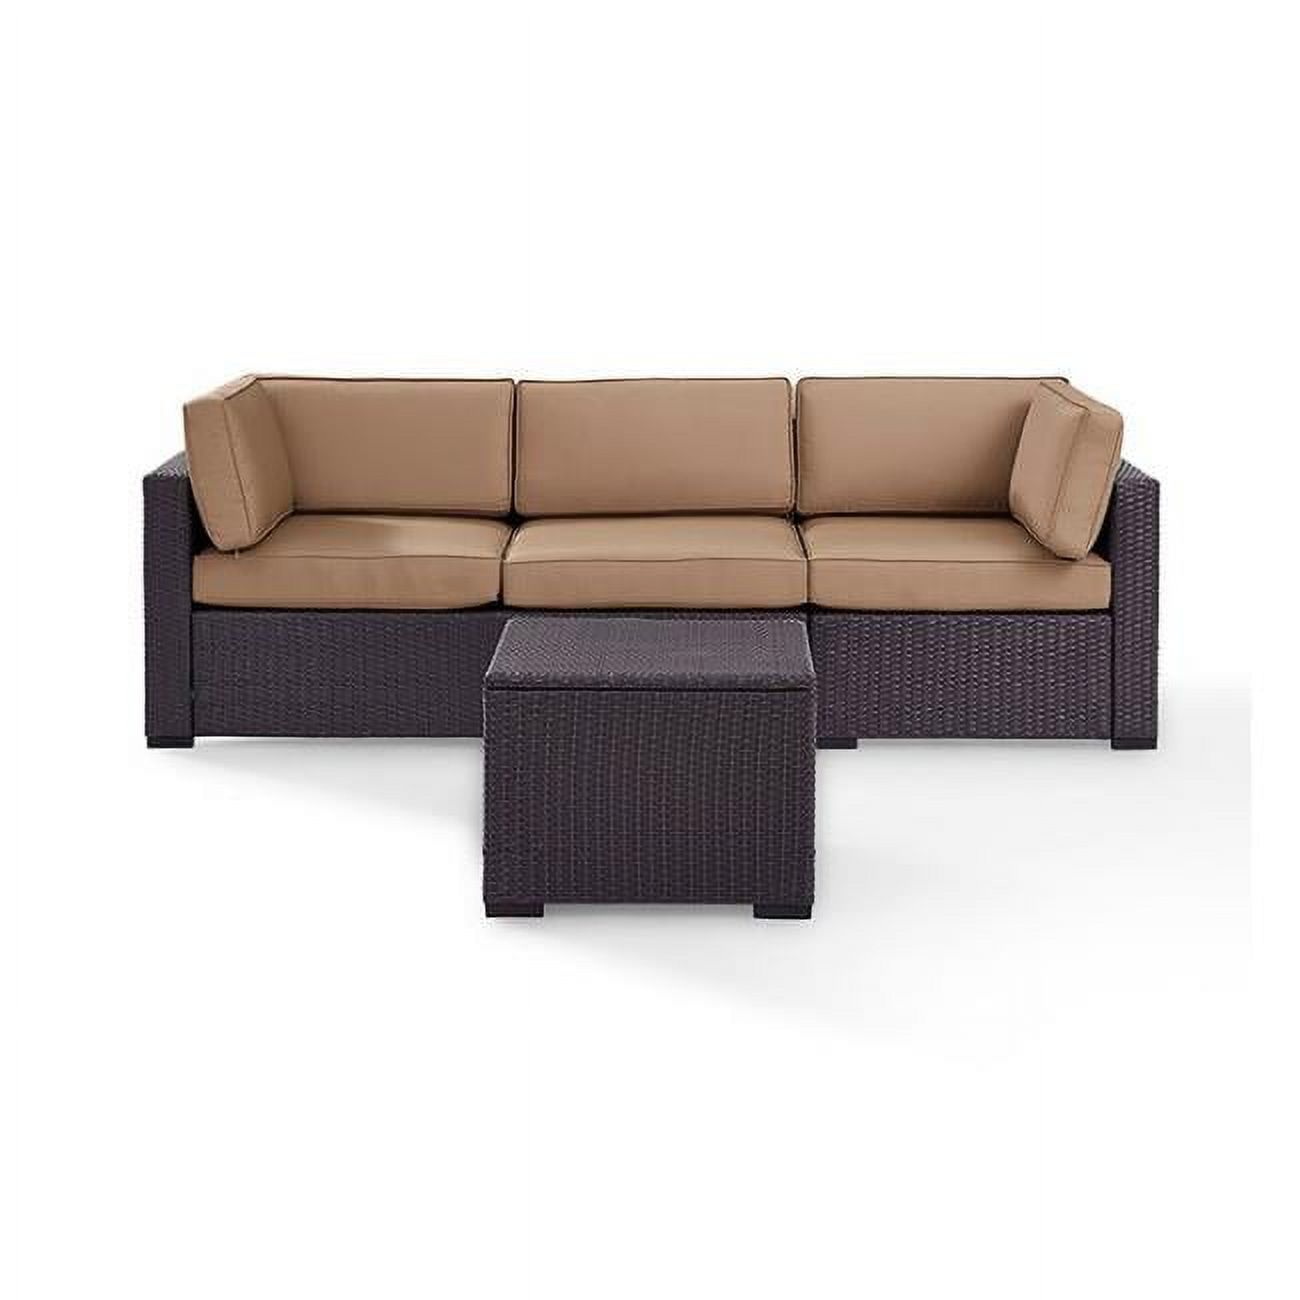 Crosley Furniture Biscayne 3 Piece Metal Patio Sofa Set in Brown/Mocha - image 1 of 4